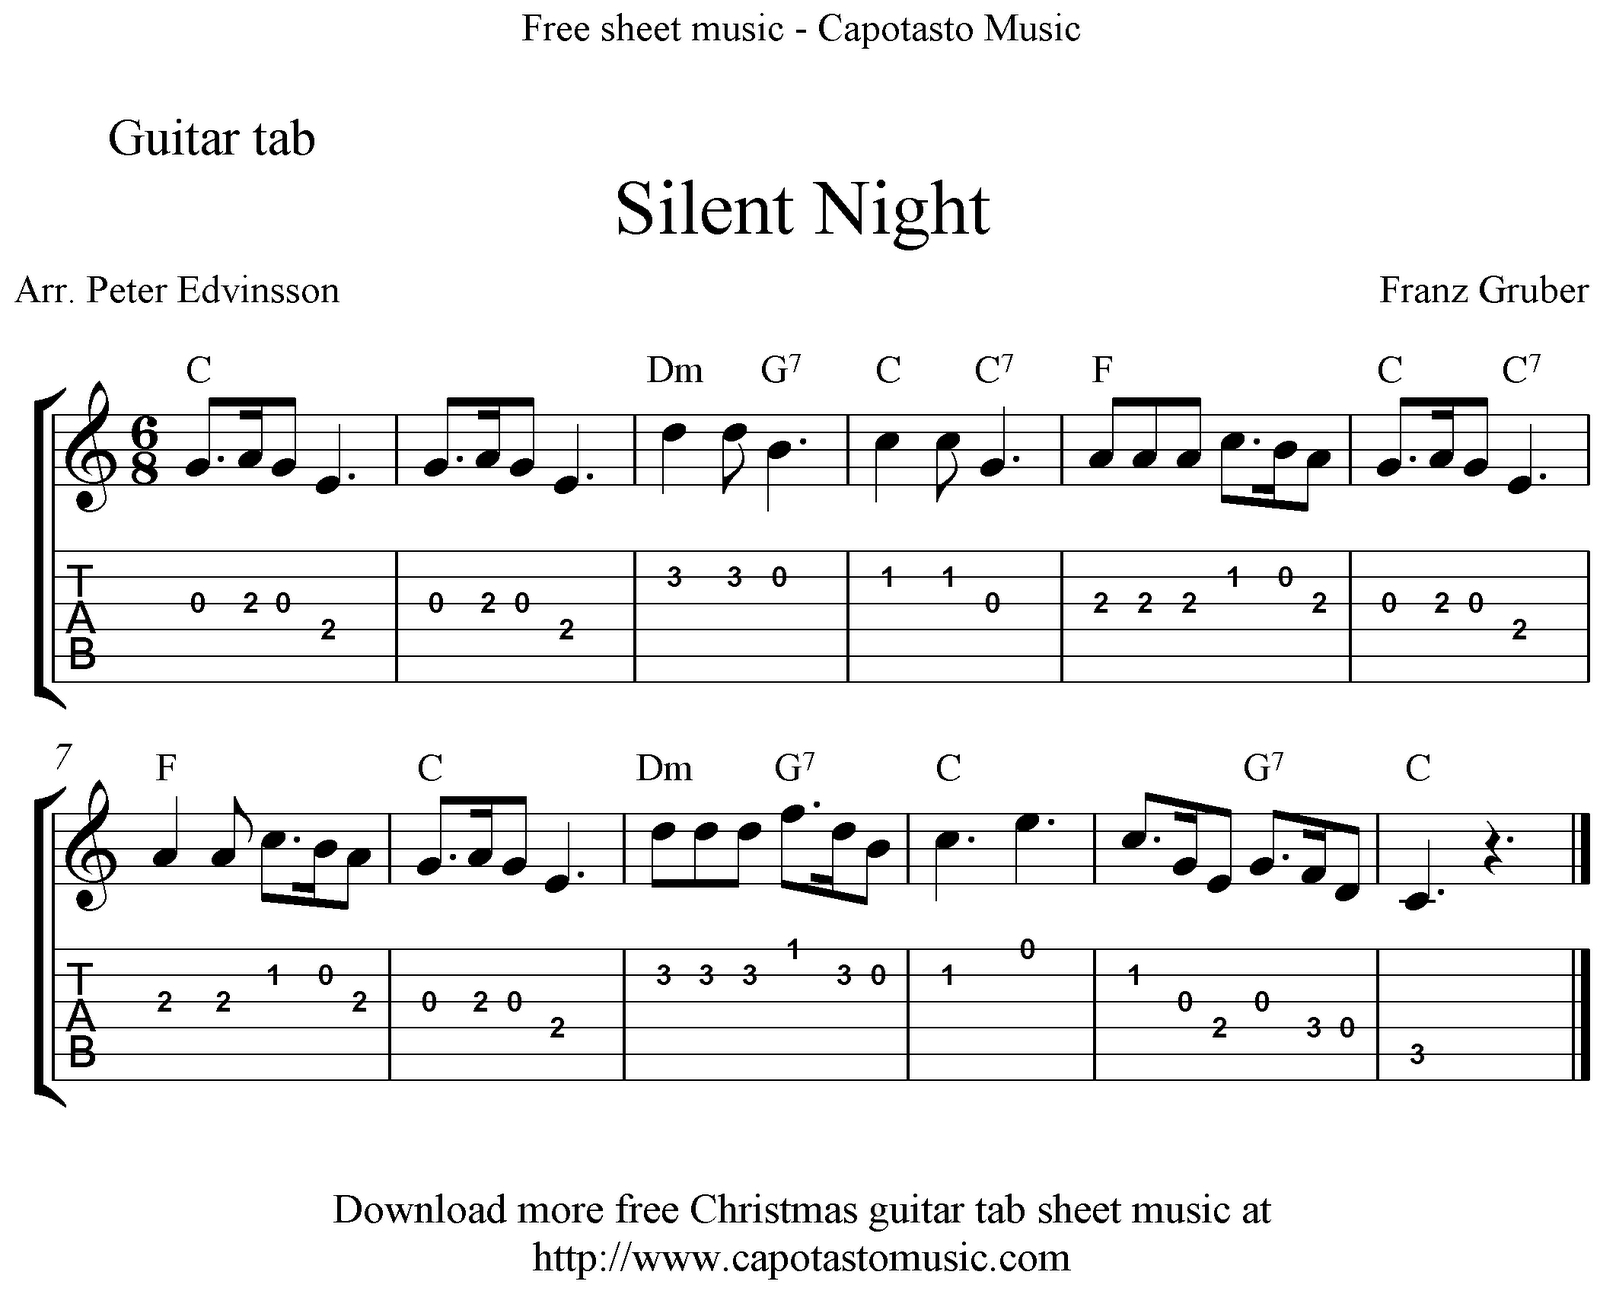 Silent Night, Easy Free Christmas Guitar Tab Sheet Music - Free Printable Guitar Music